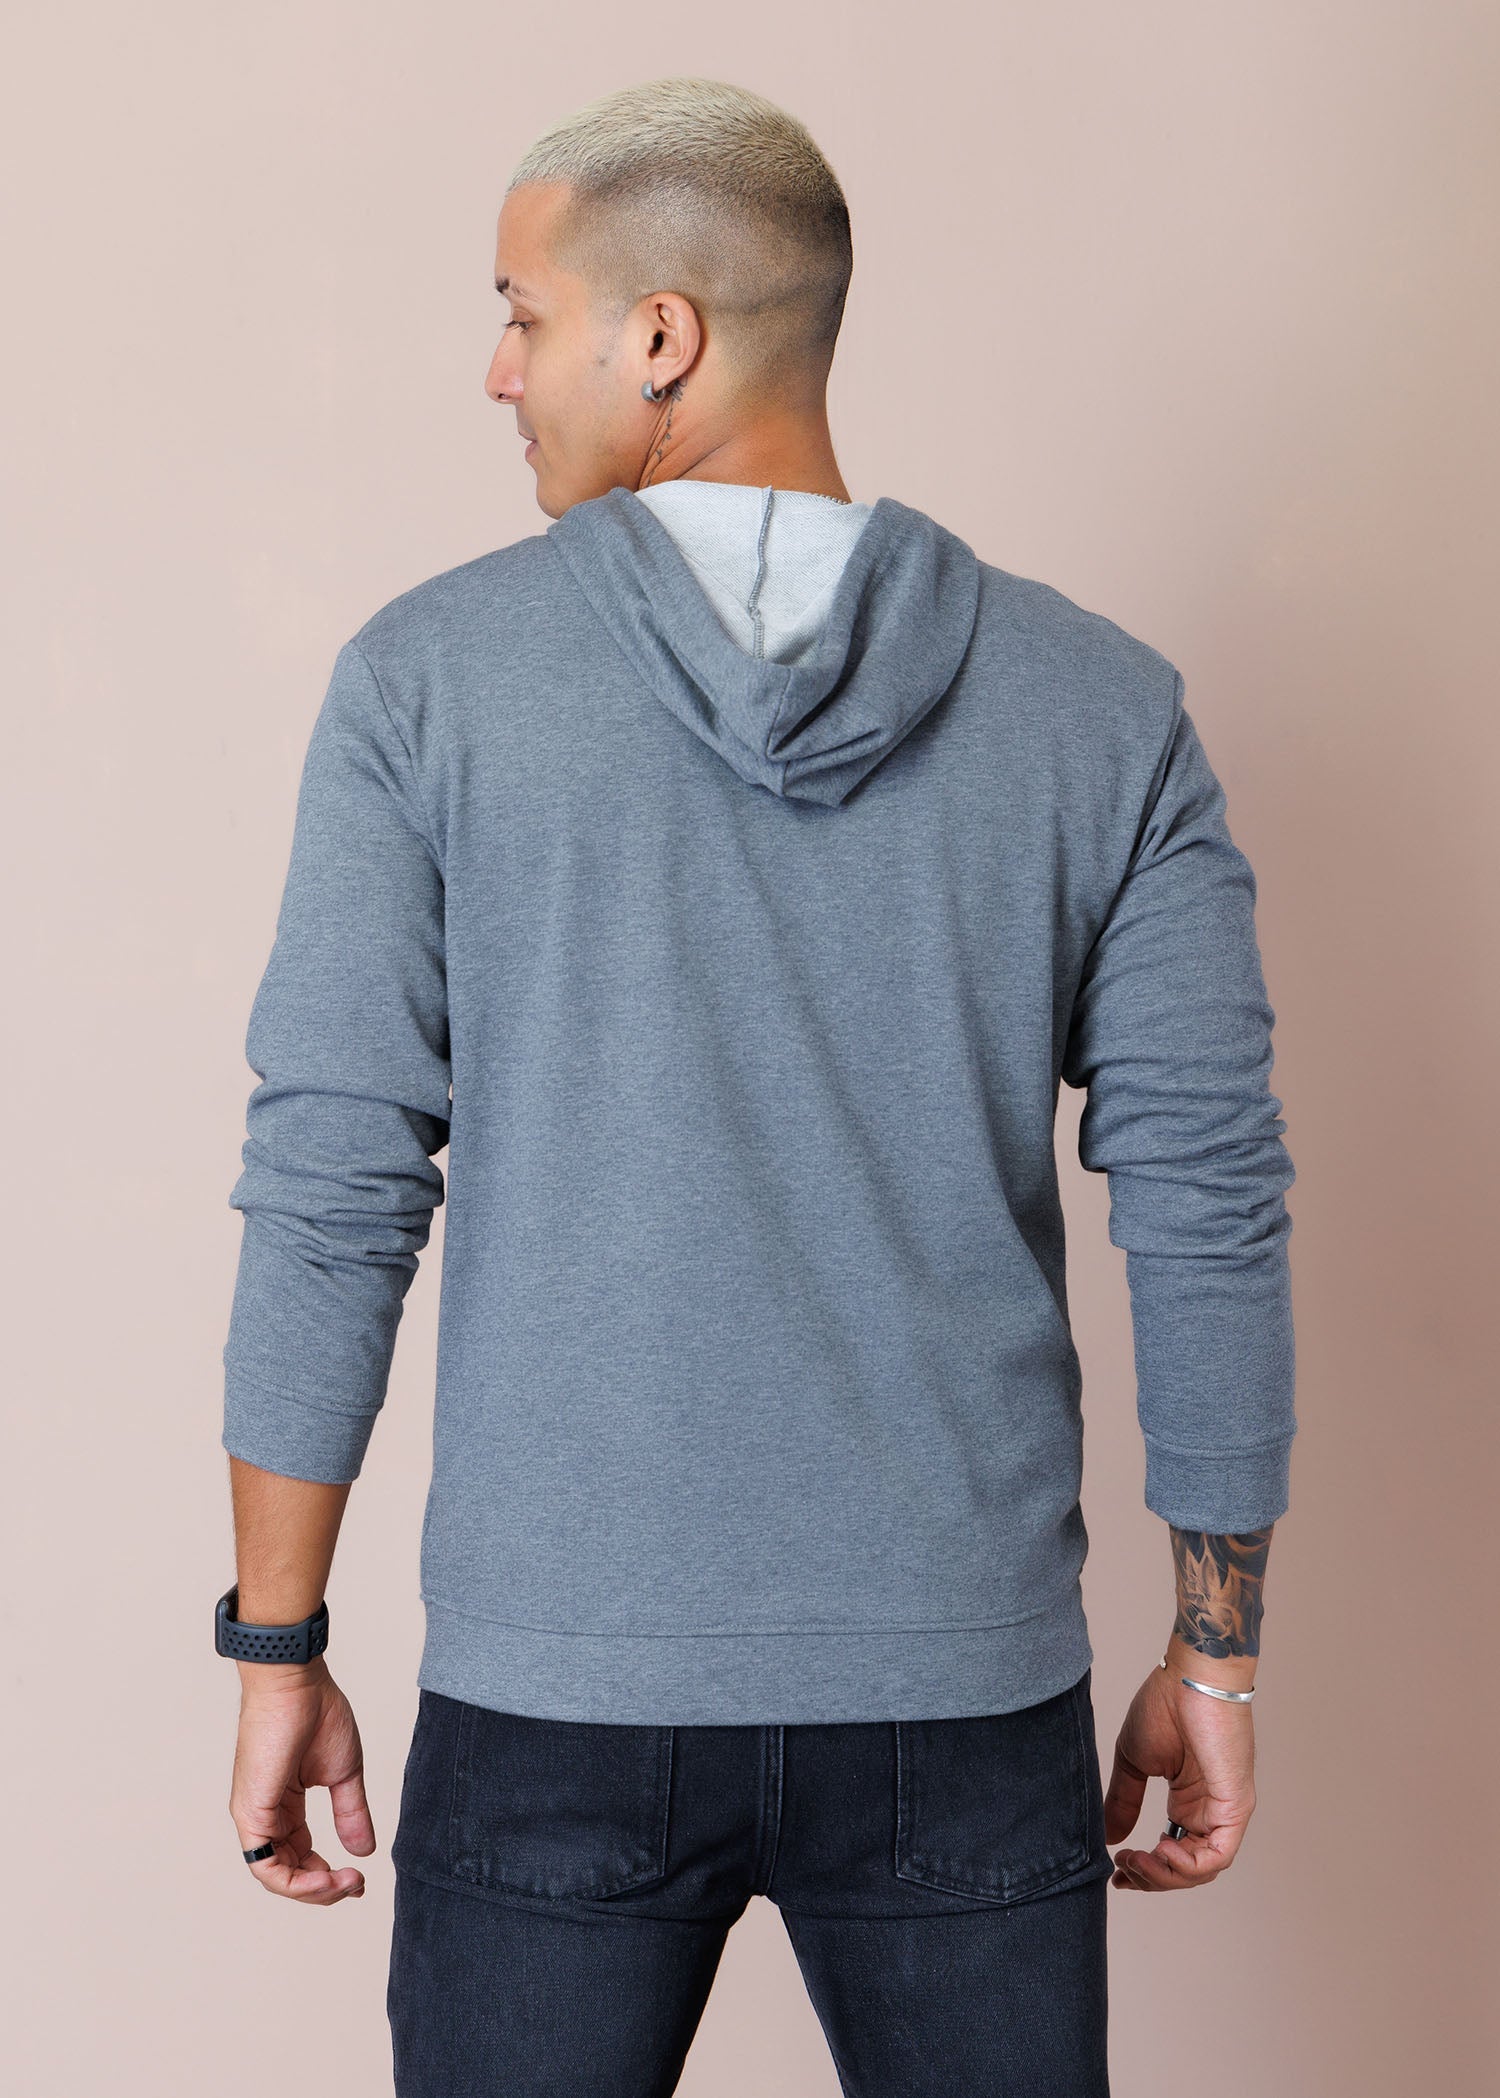 Winter Wear Hoodie With  Ditachable Zipper